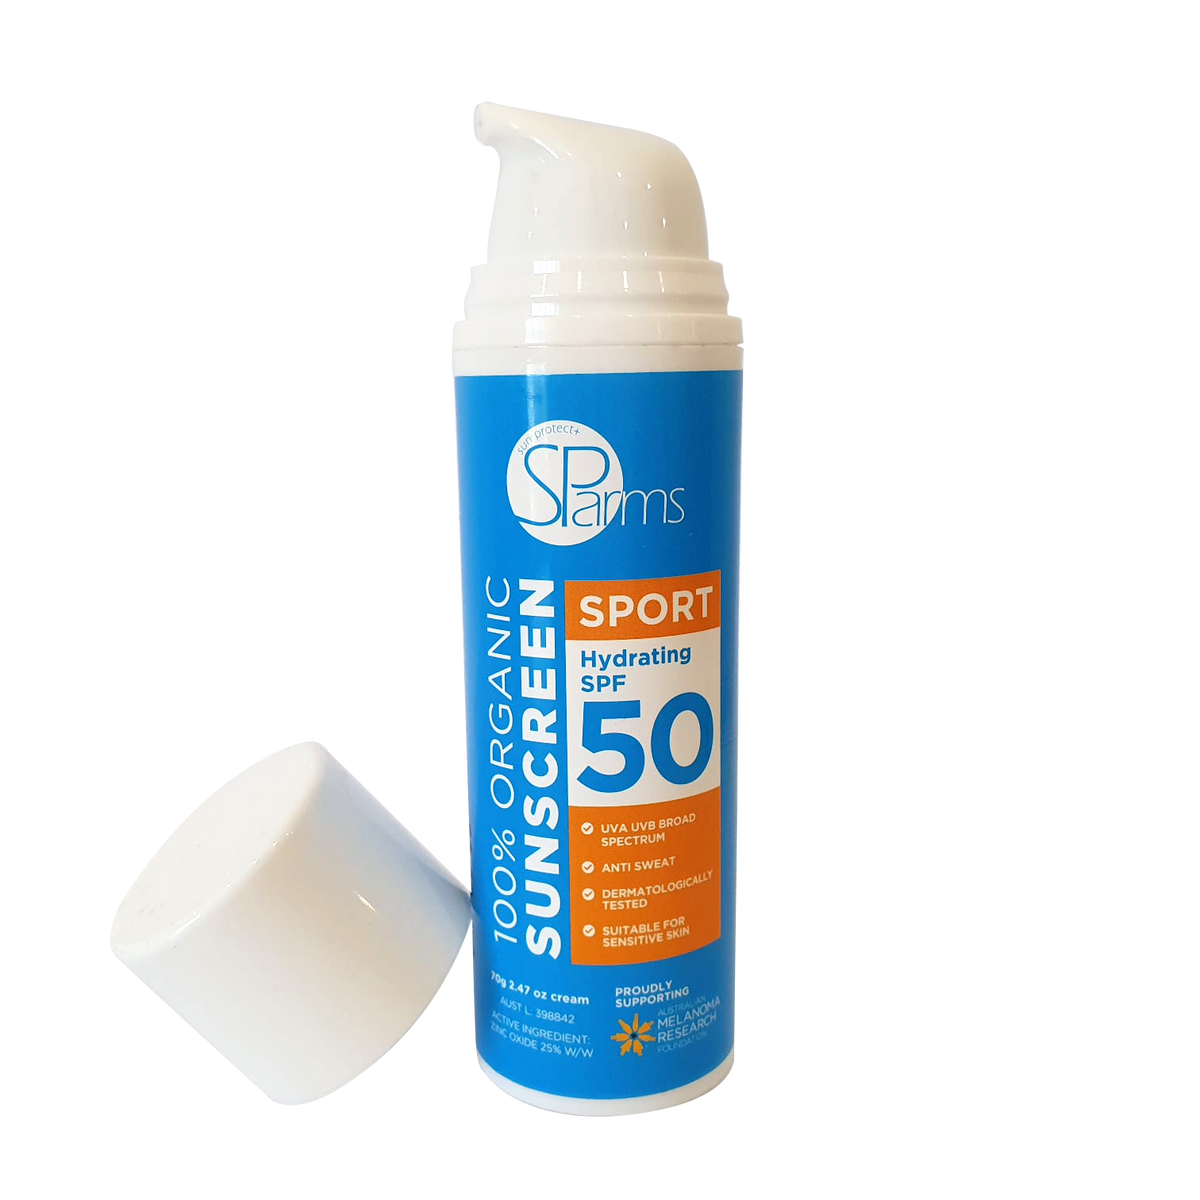 100% Organic Sunscreen - Sport